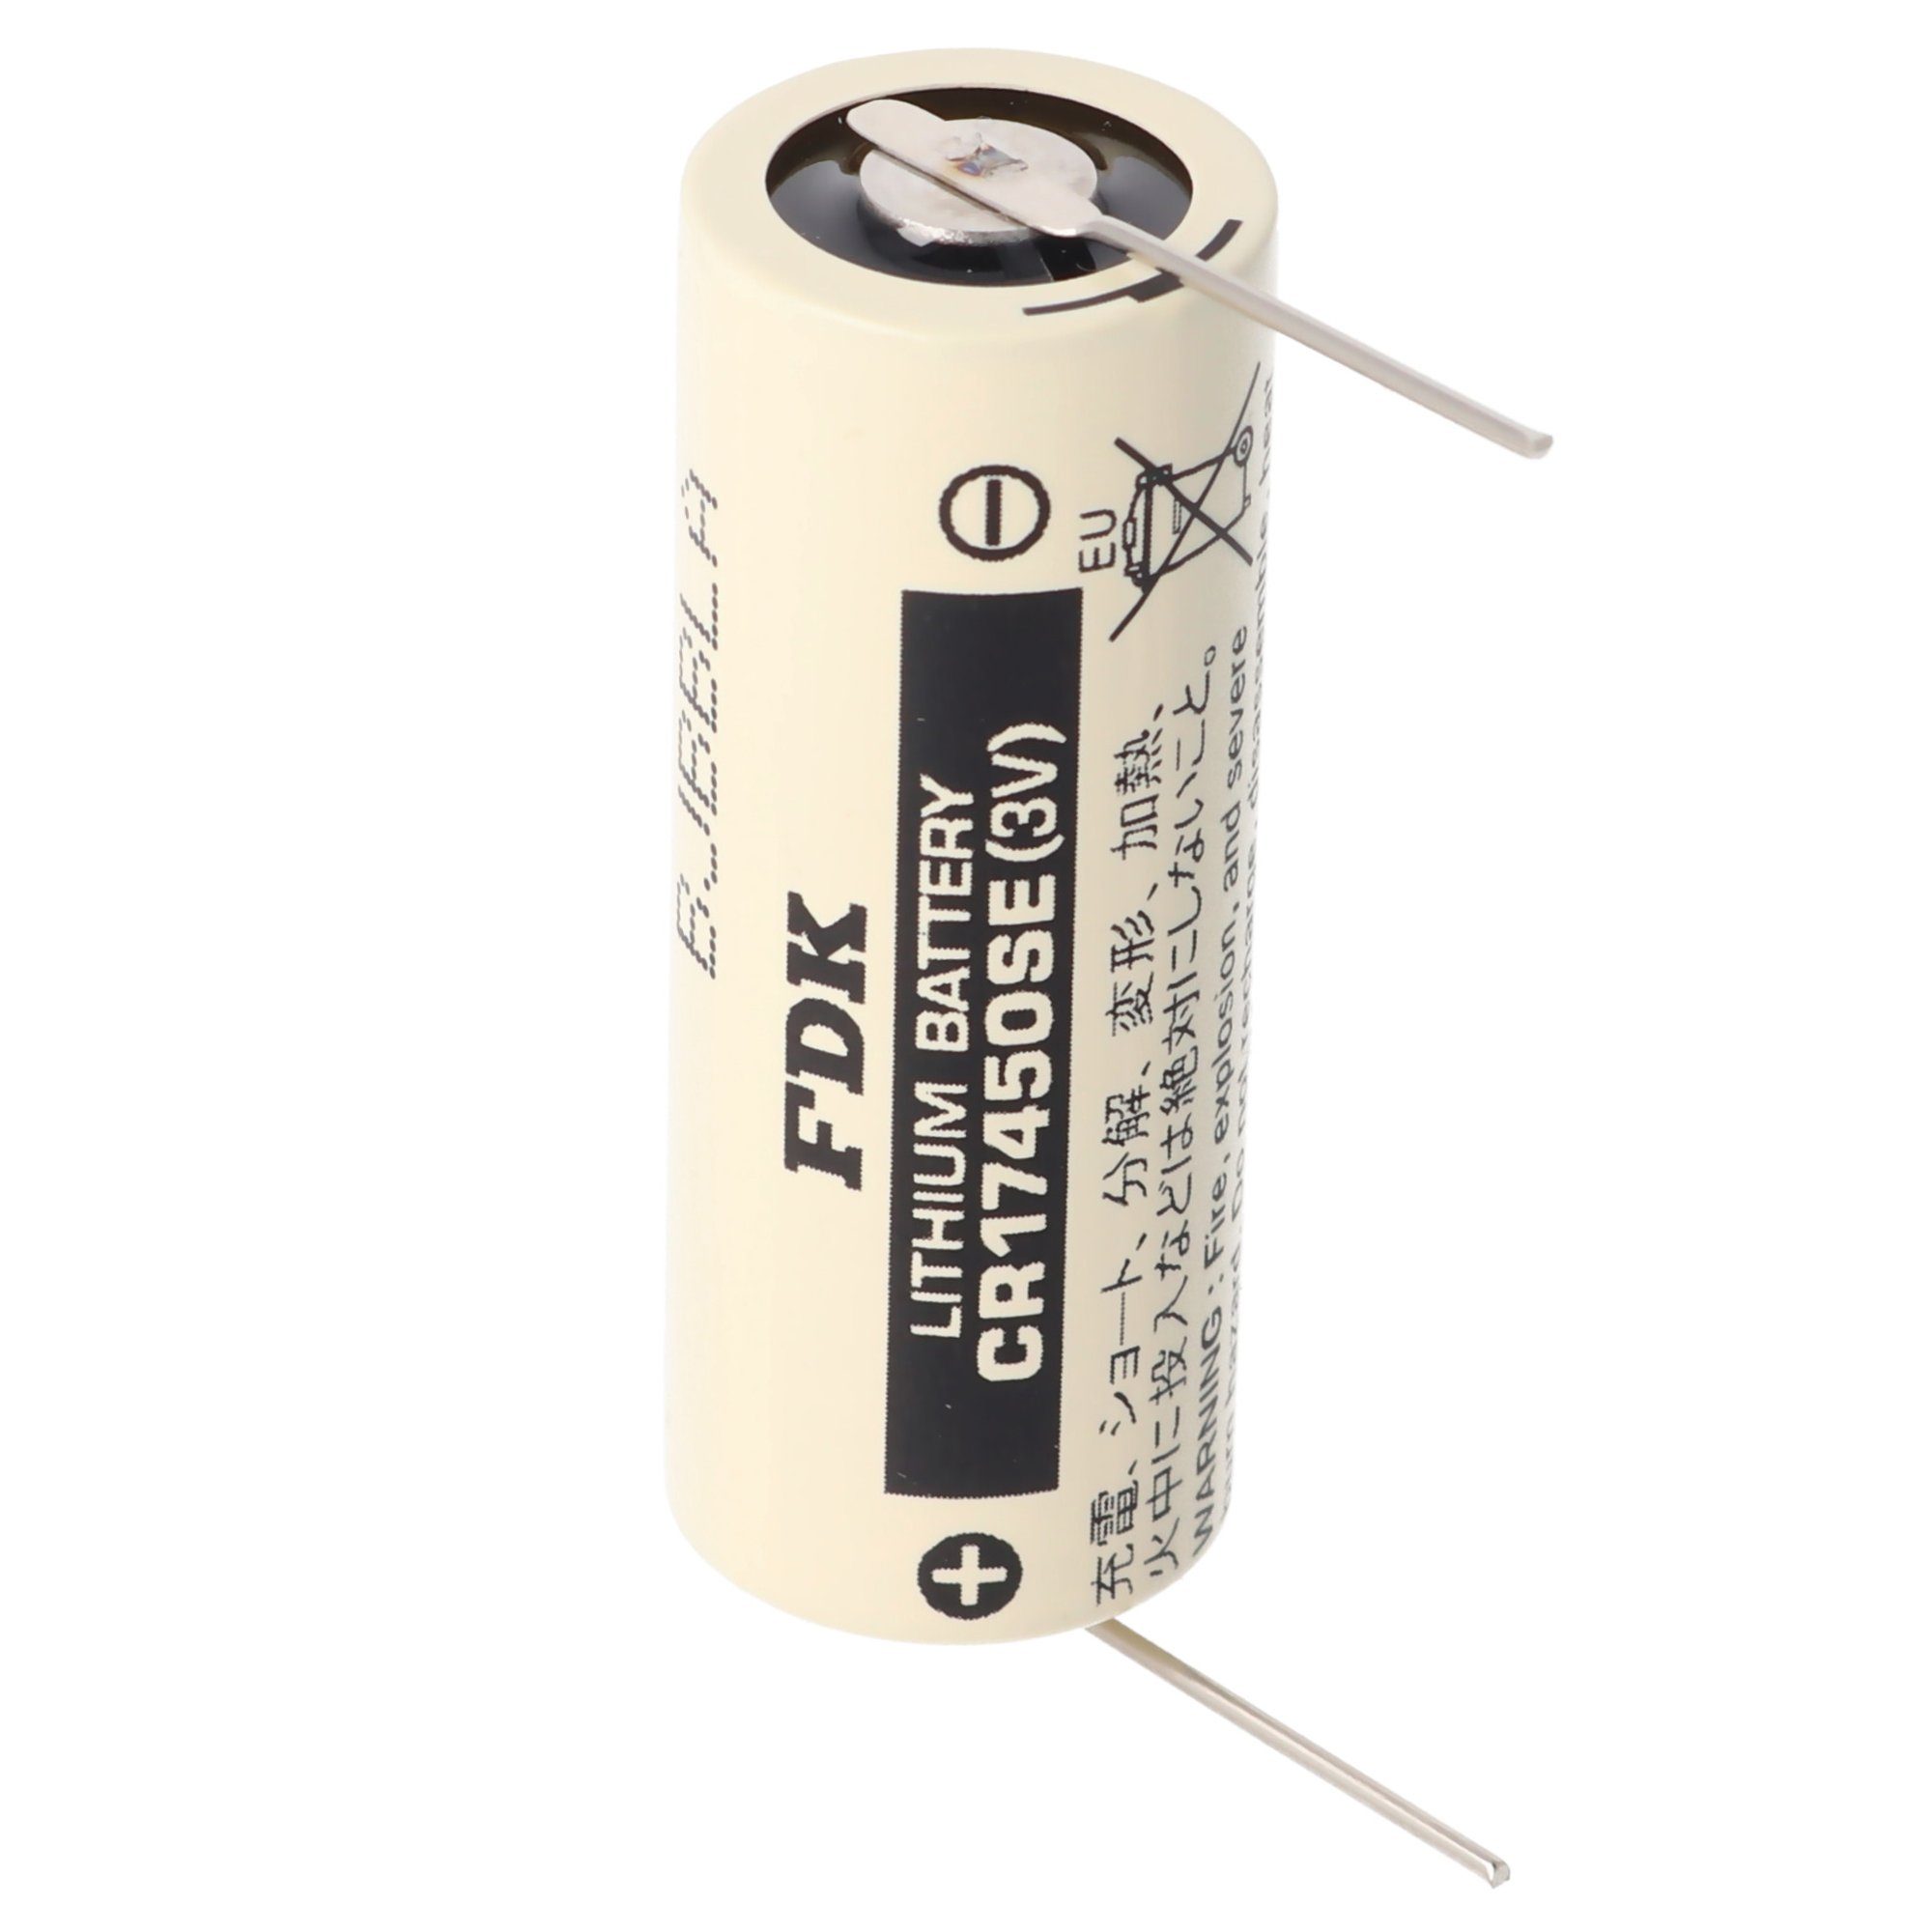 Sanyo Sanyo Lithium Batterie CR17450SE Size A, mit Lötpadel, Neu von FDK Batterie, (3,0 V)